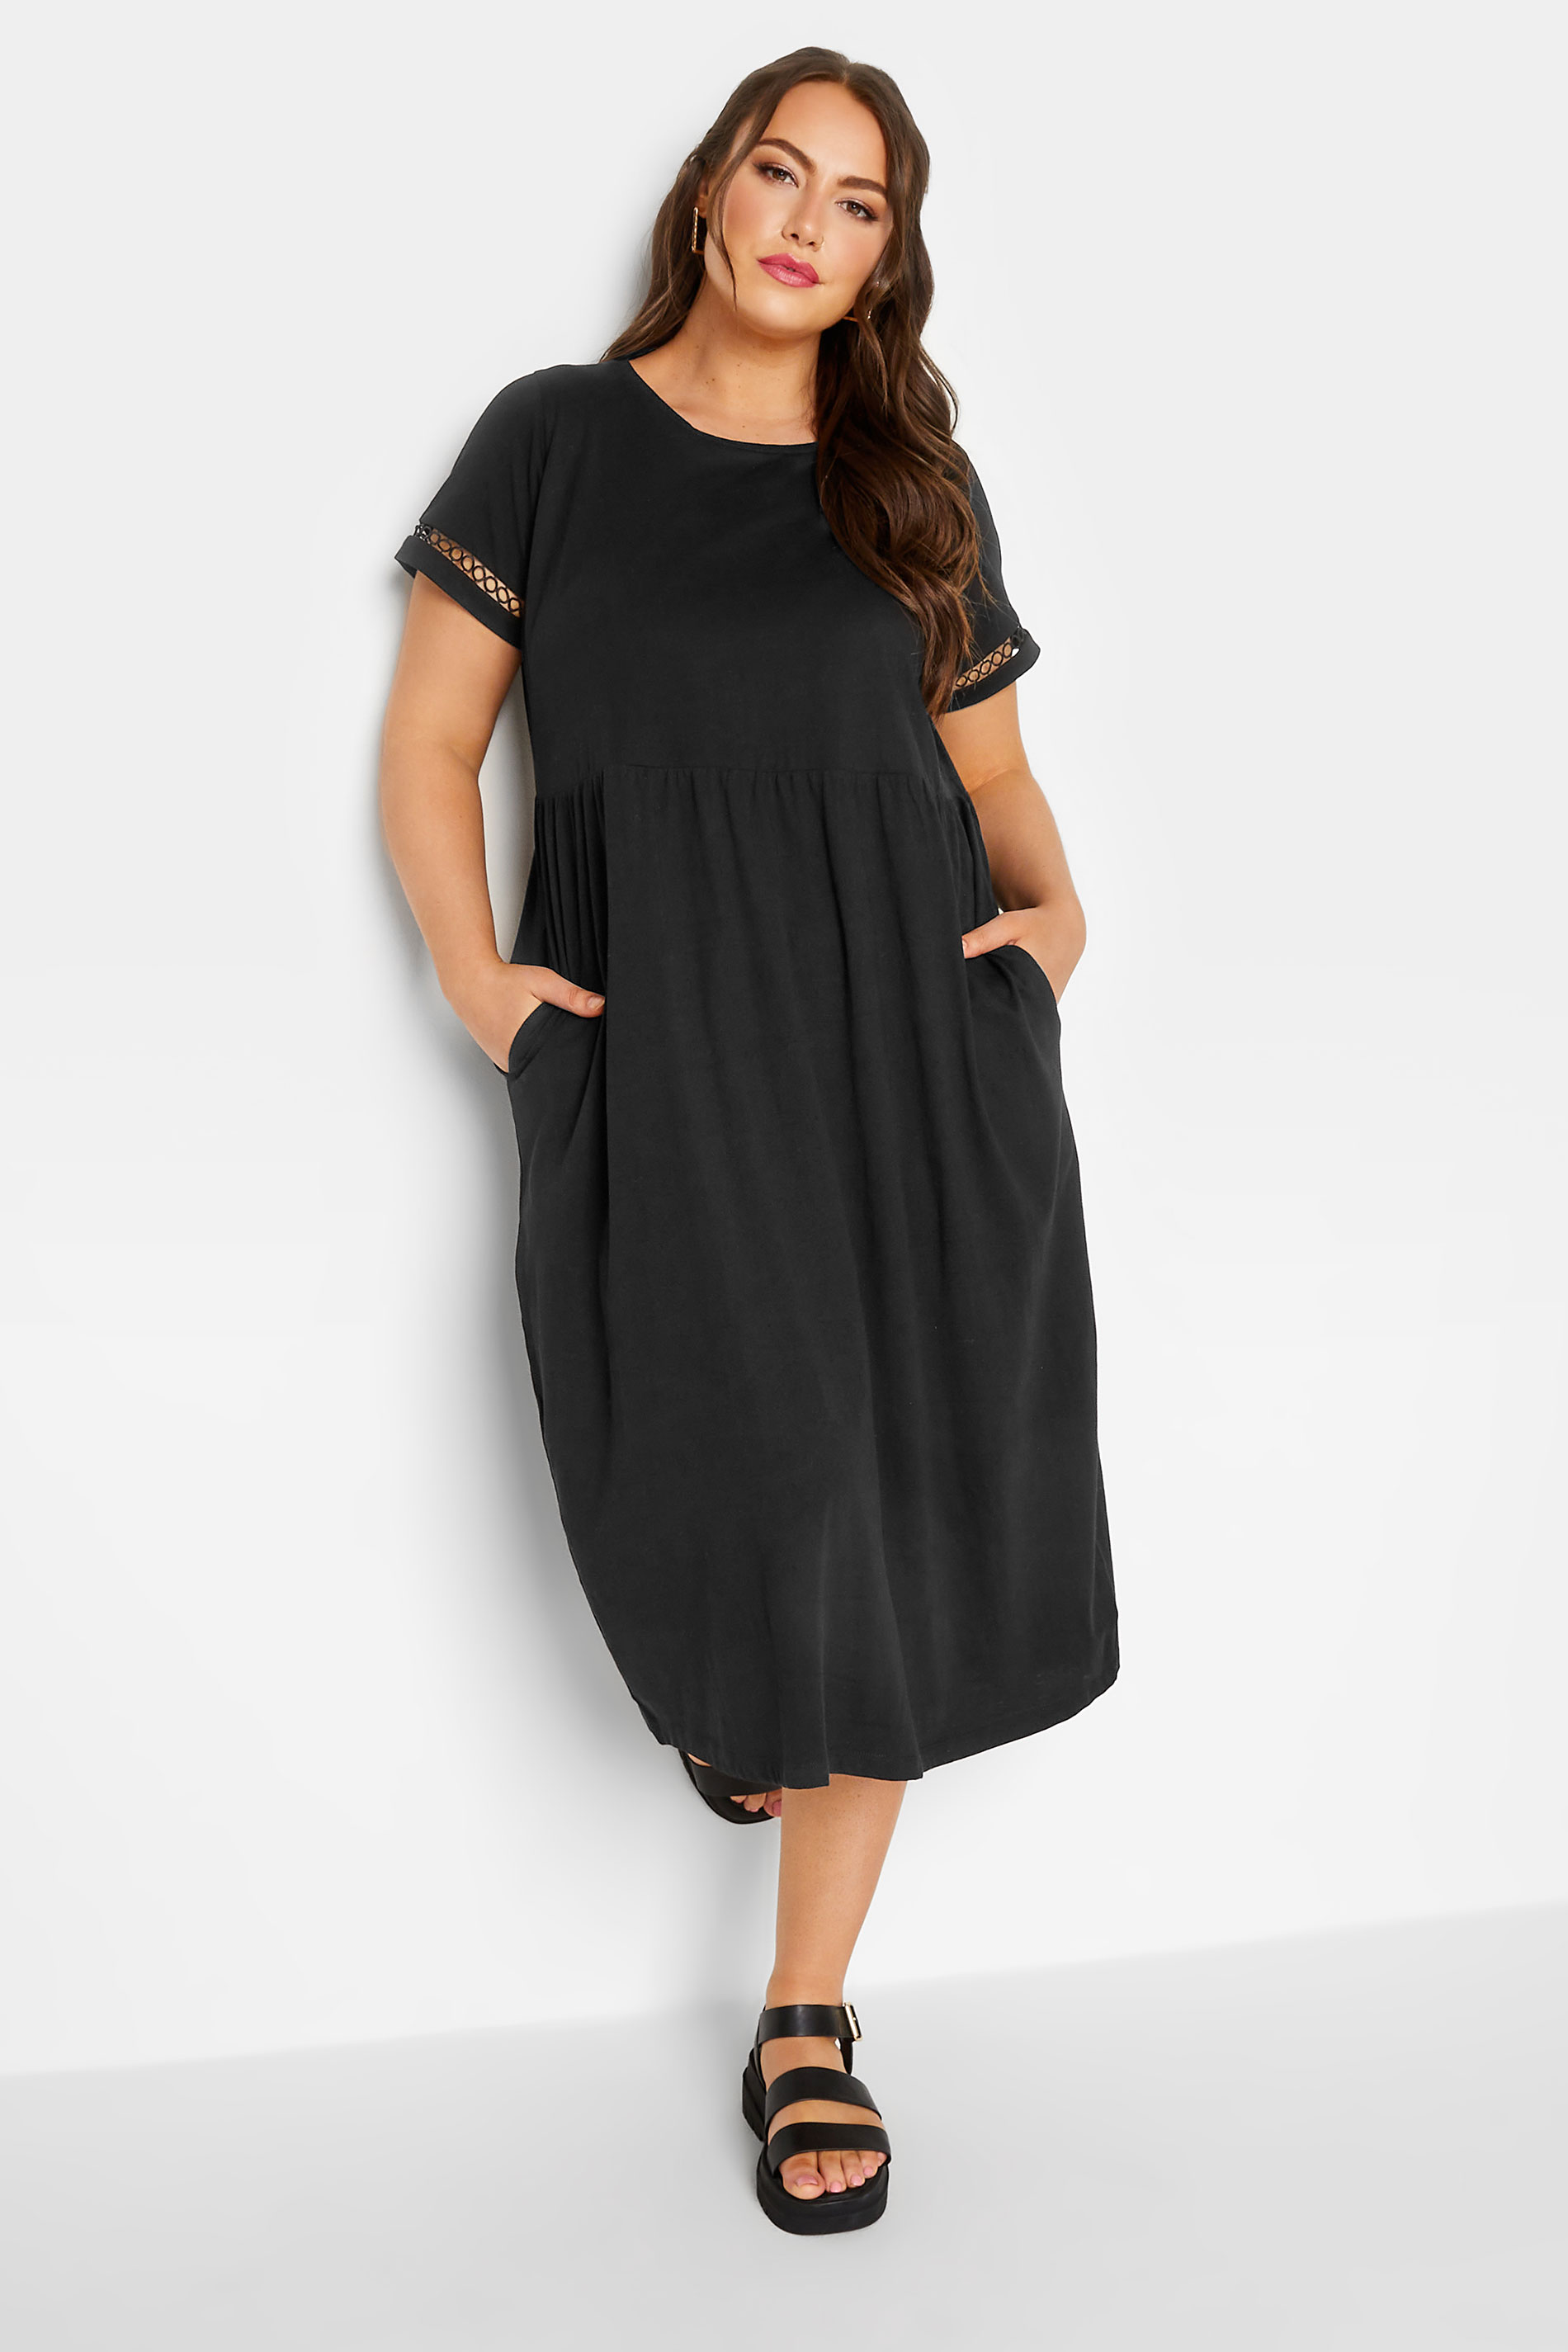 procent oprejst Parasit LIMITED COLLECTION Plus Size Black Crochet Trim T-Shirt Dress | Yours  Clothing